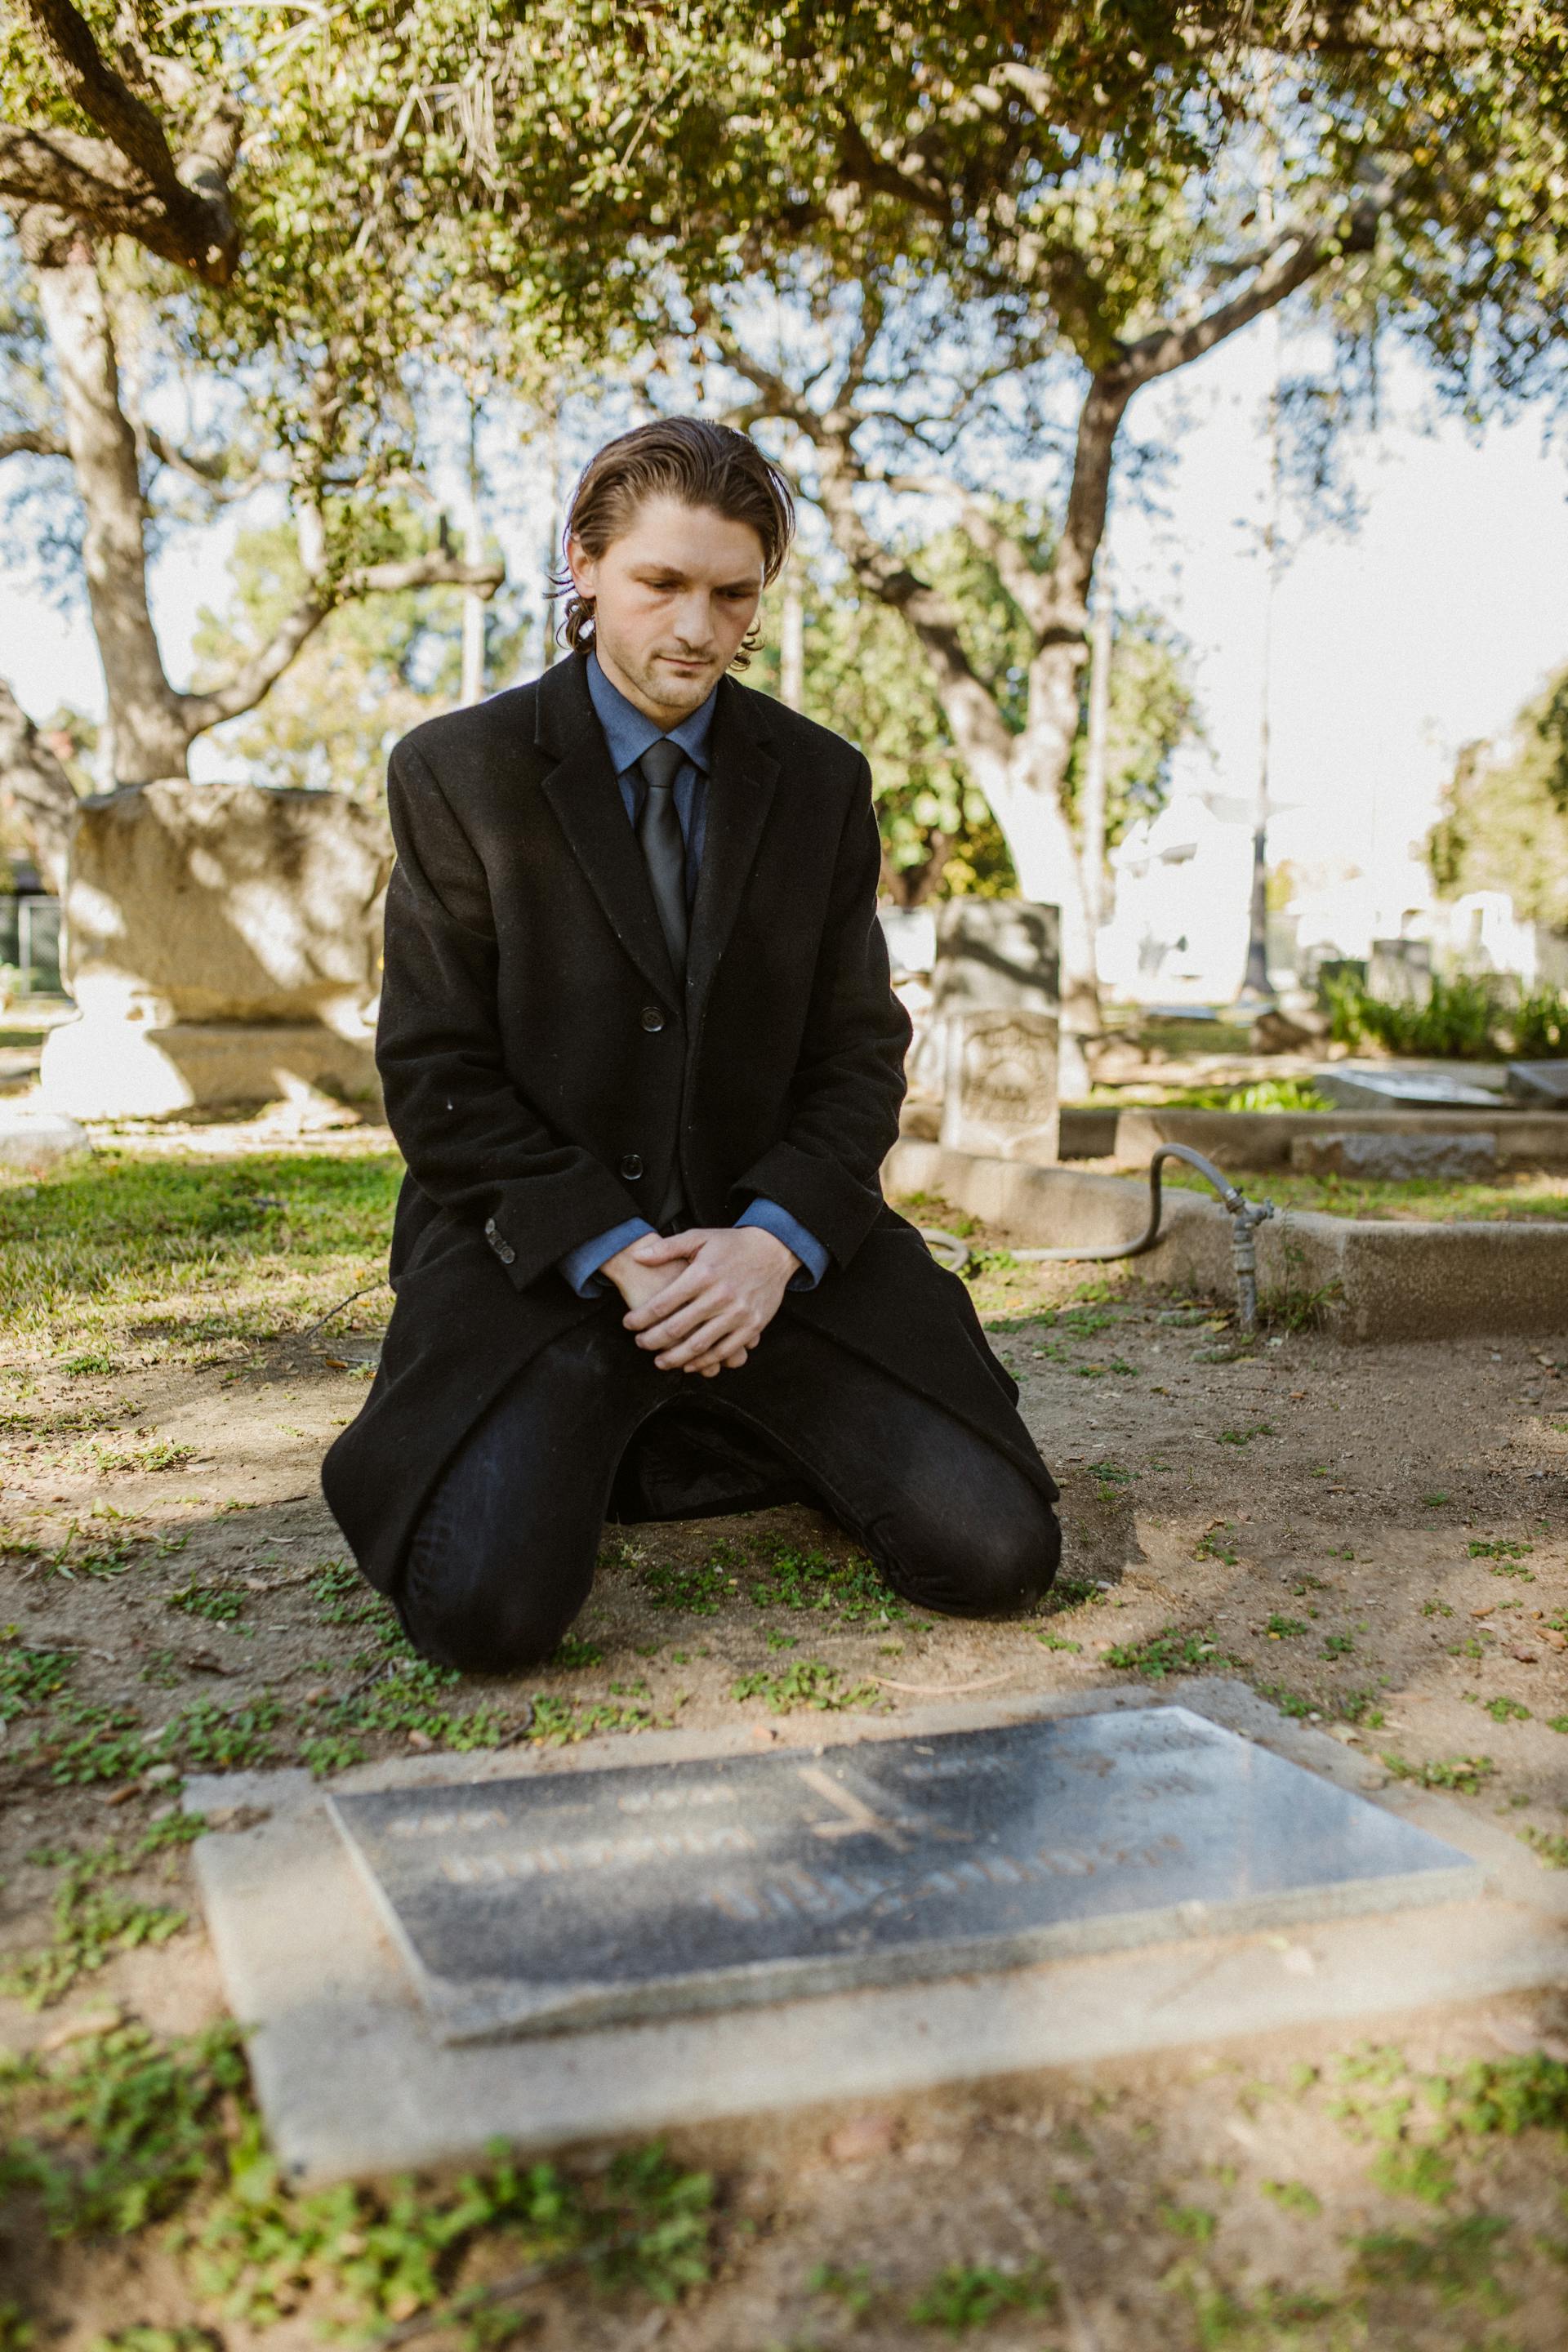 A young man at a grave | Source: Pexels